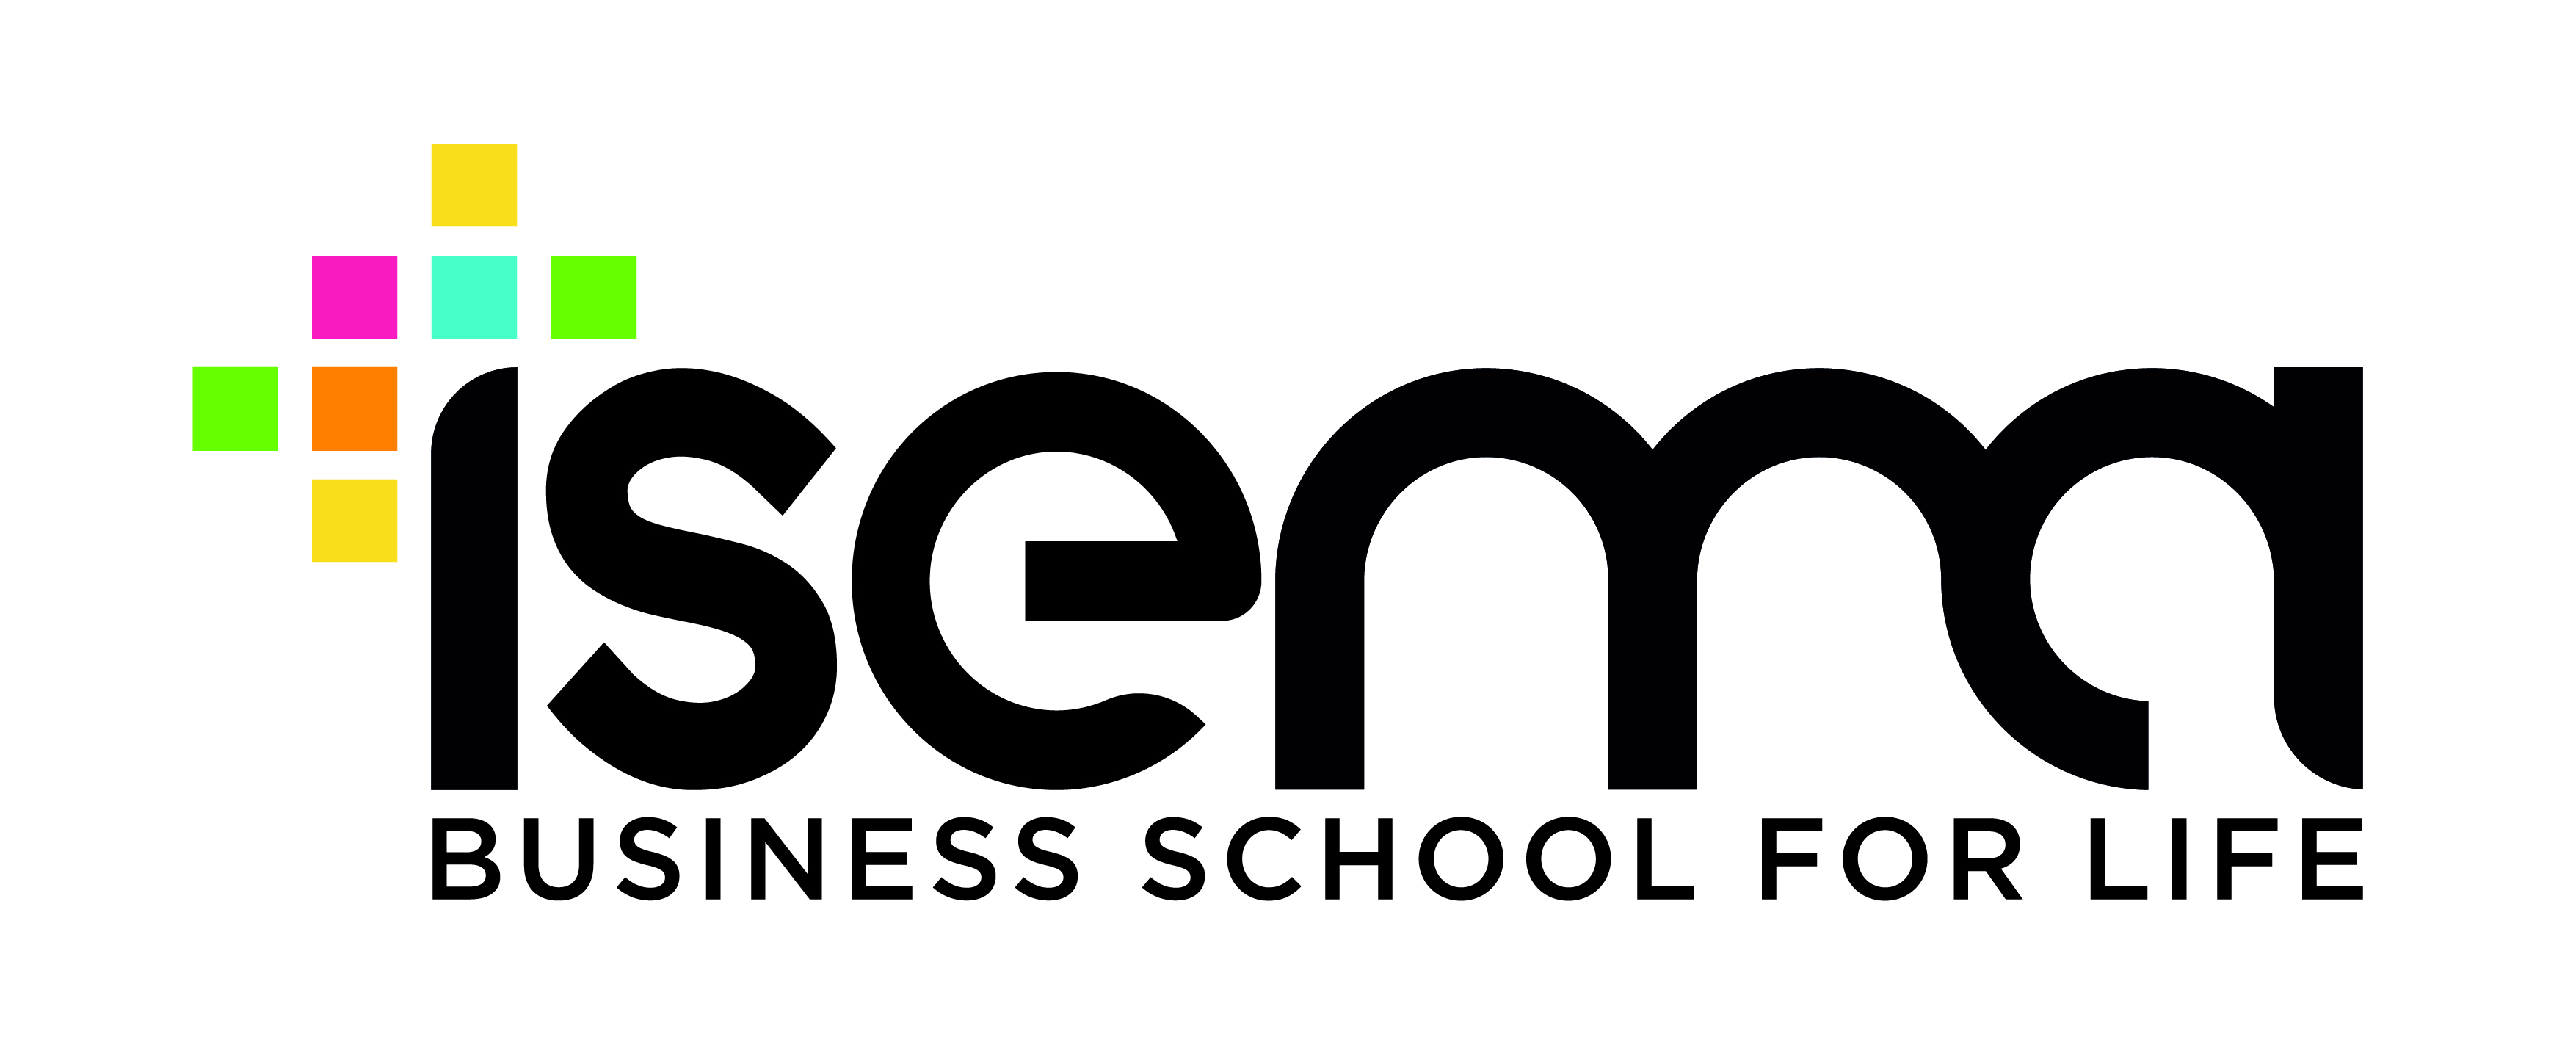 ISEMA logo 2019 business school for life